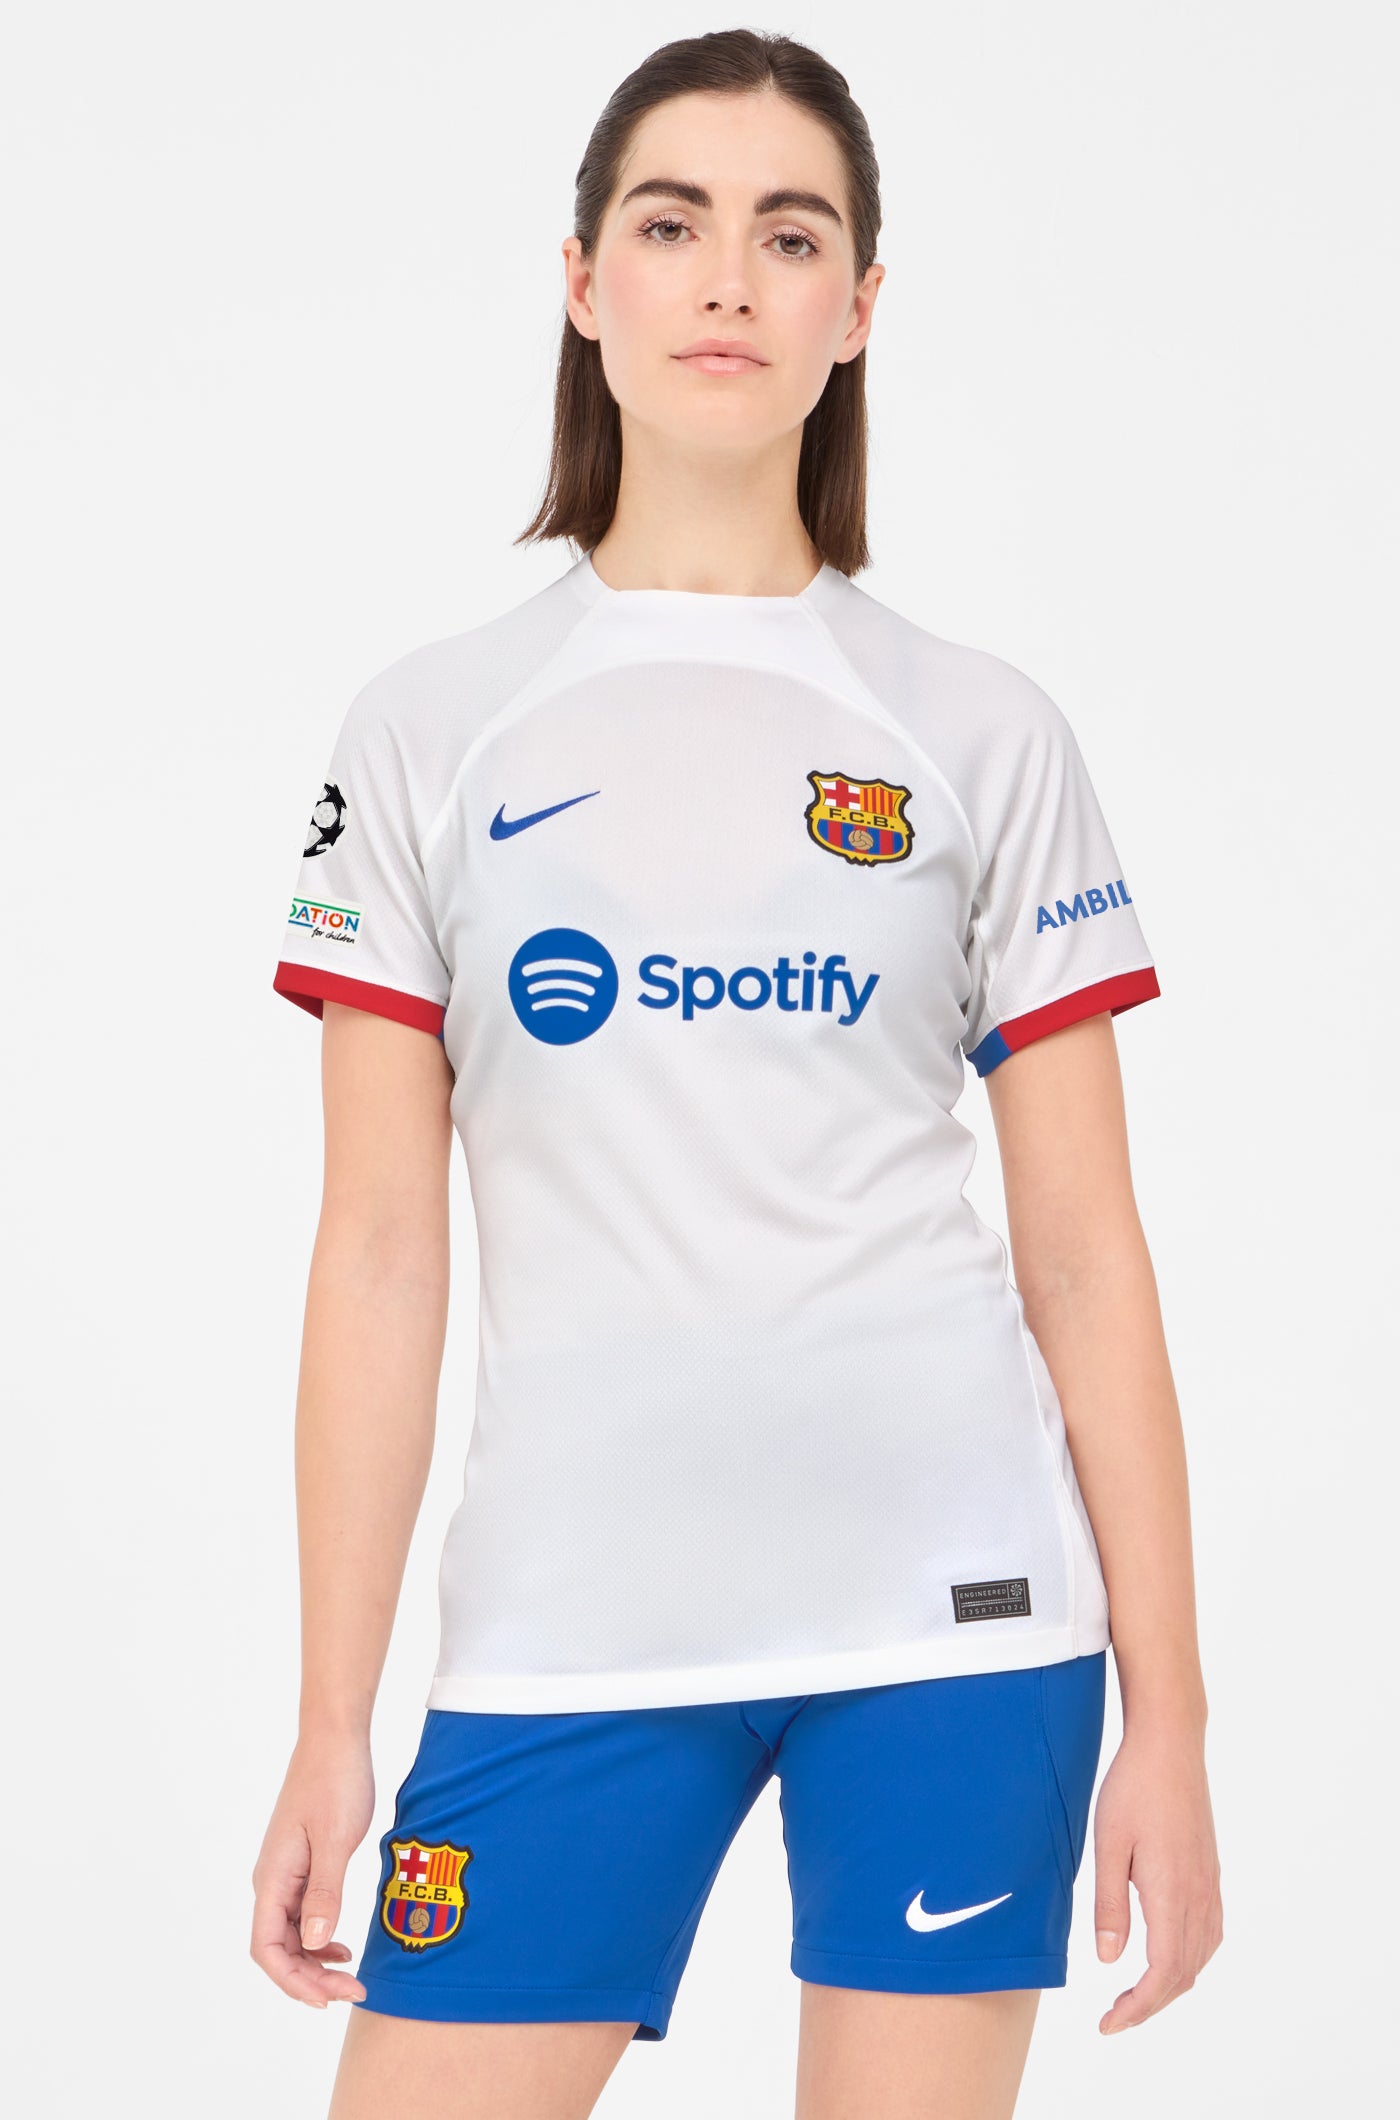 UCL FC Barcelona away shirt 23/24 - Women  - VITOR ROQUE